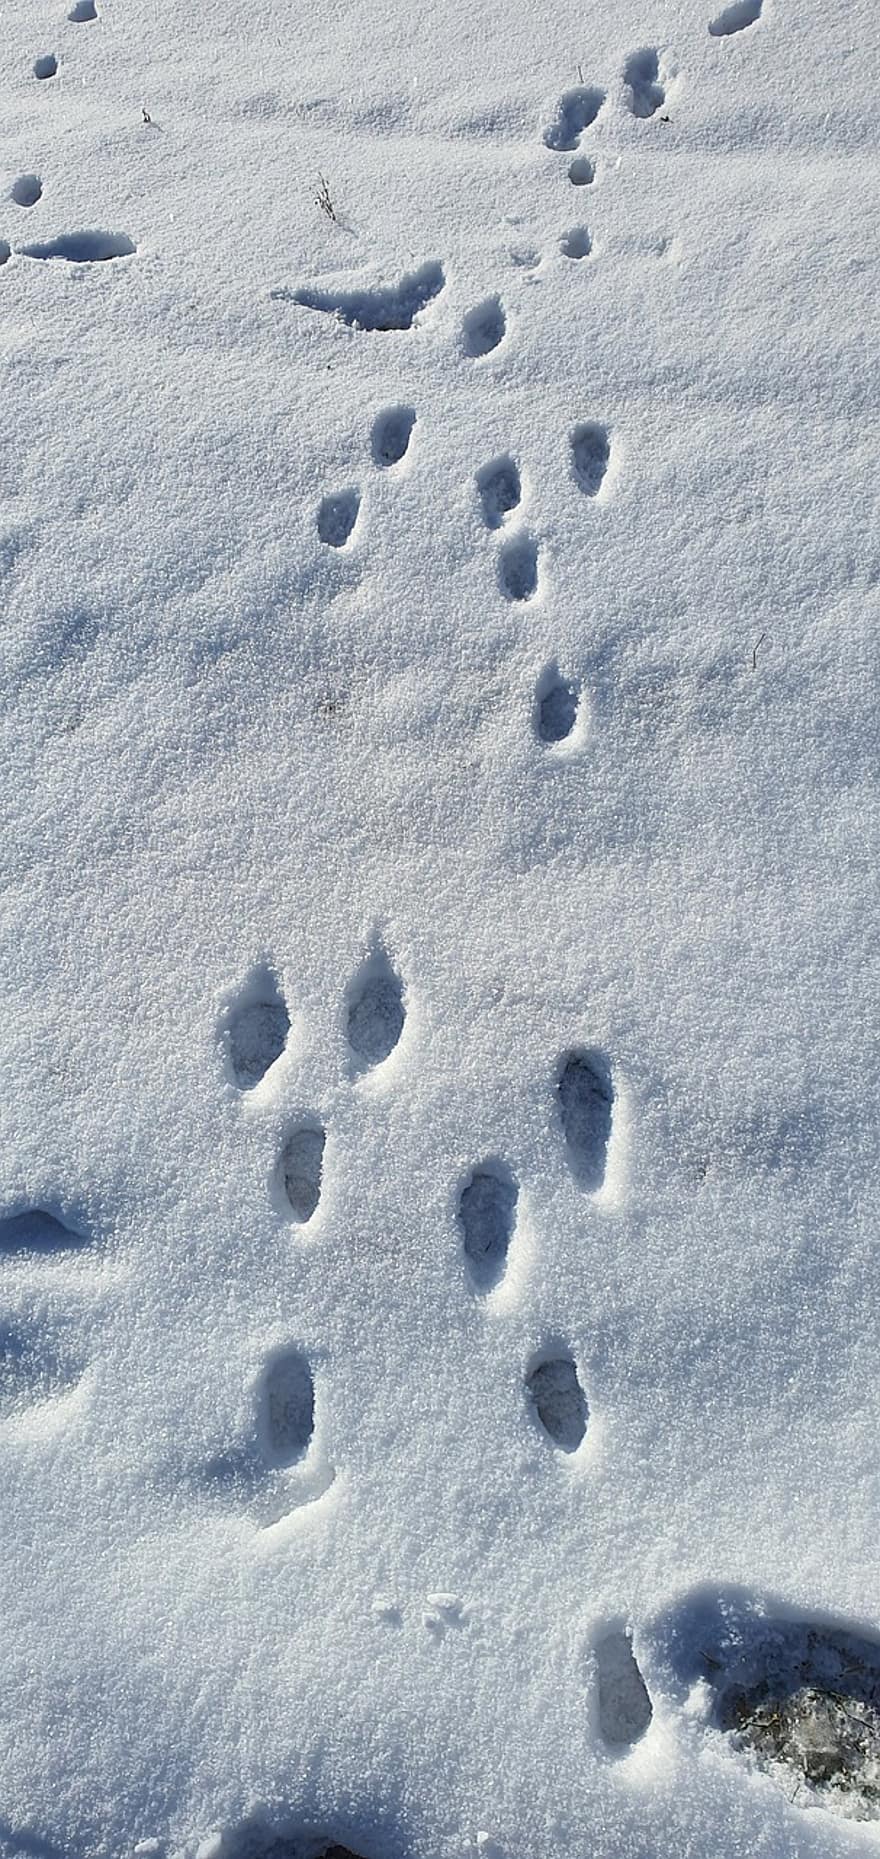 Snow, Footprints, footprint, winter, backgrounds, track, imprint, pattern, season, walking, close-up